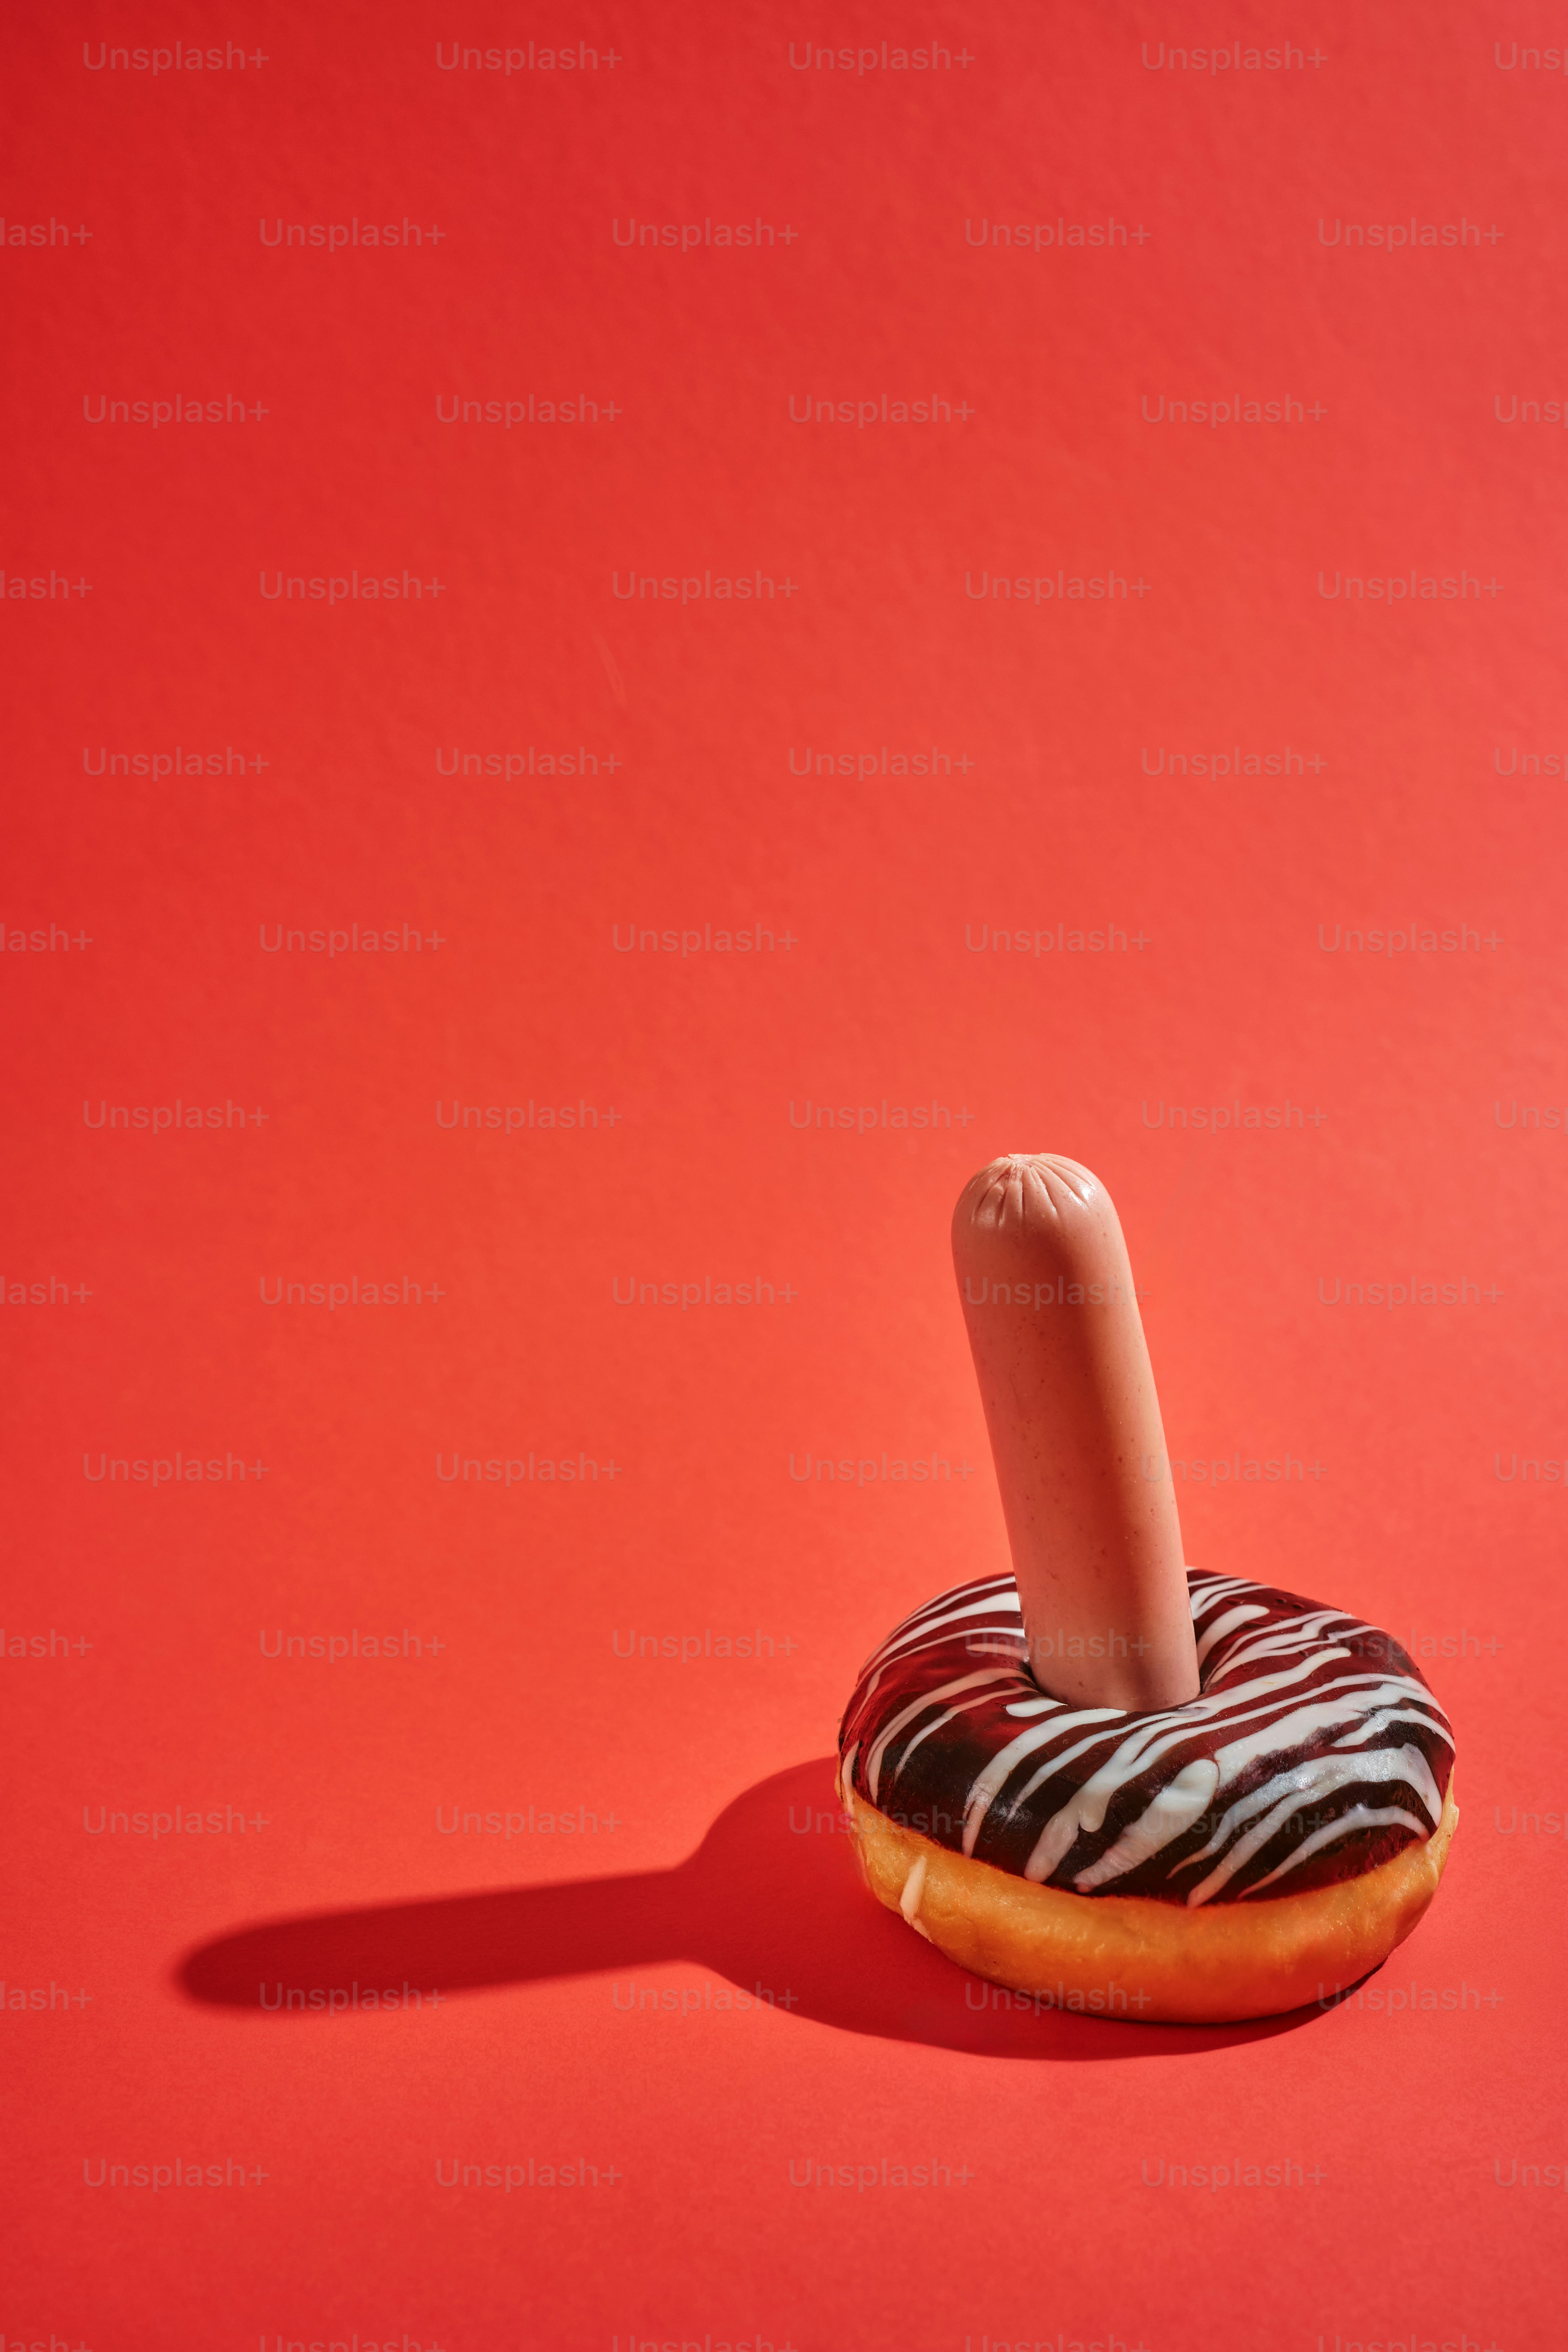 the doughnut as a sexual metaphor